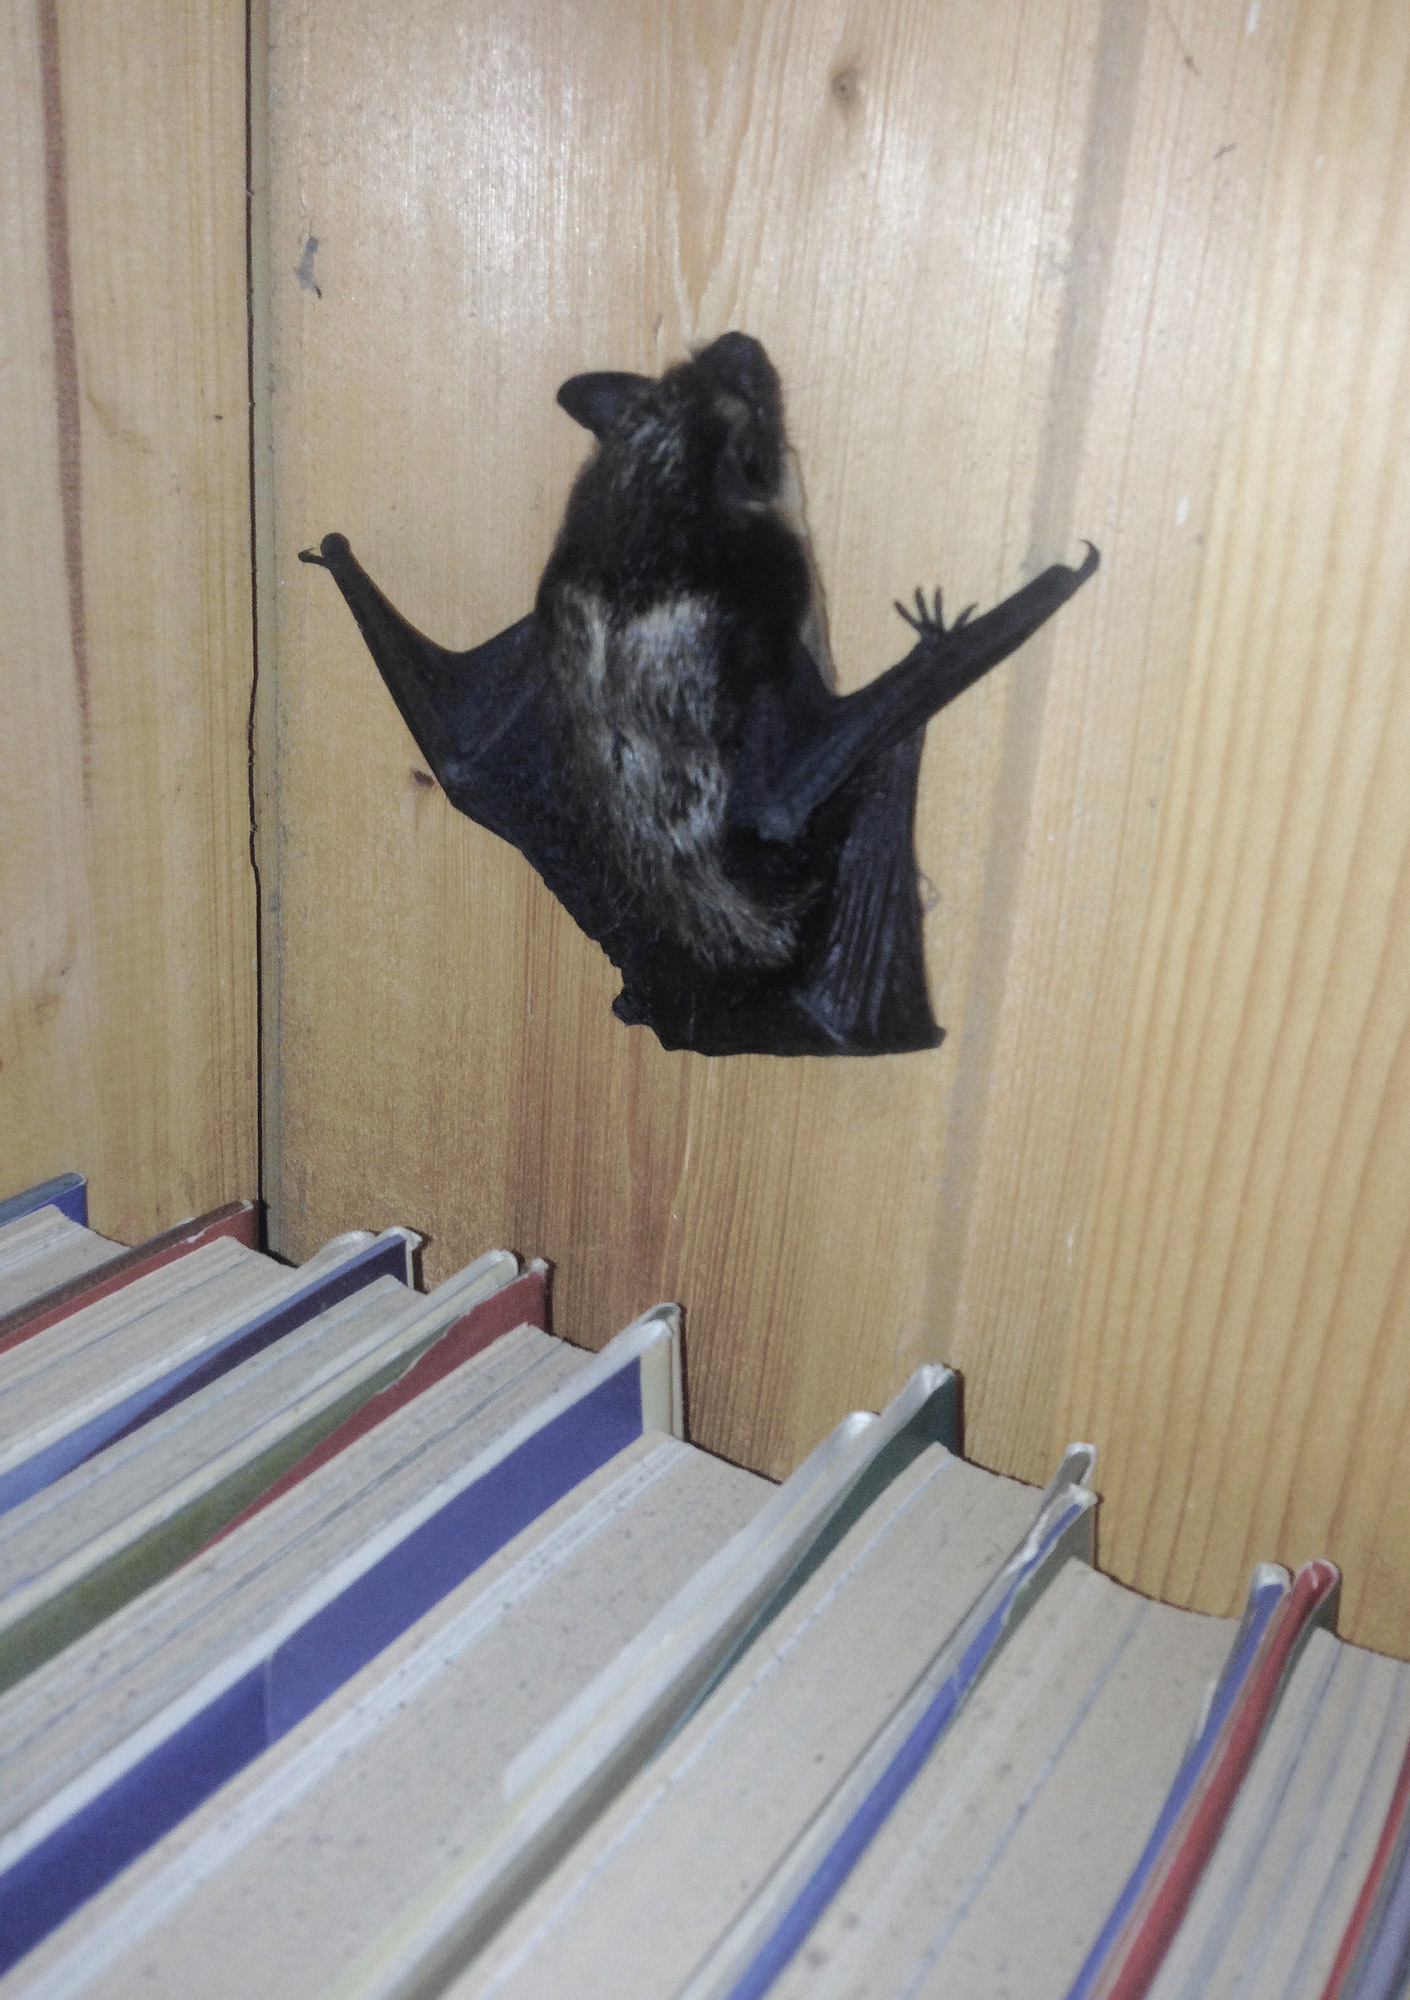 A bat in a bookshelf. By: Tarvo Tiivits